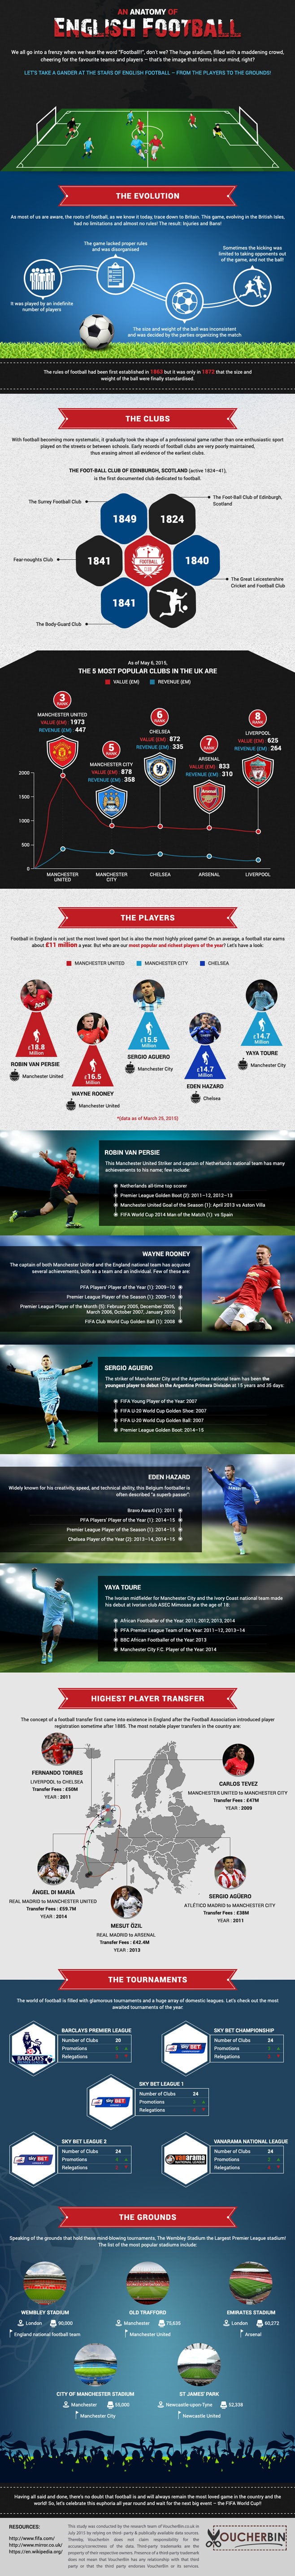 voucherbin-infographic-an-anatomy-of-english-football